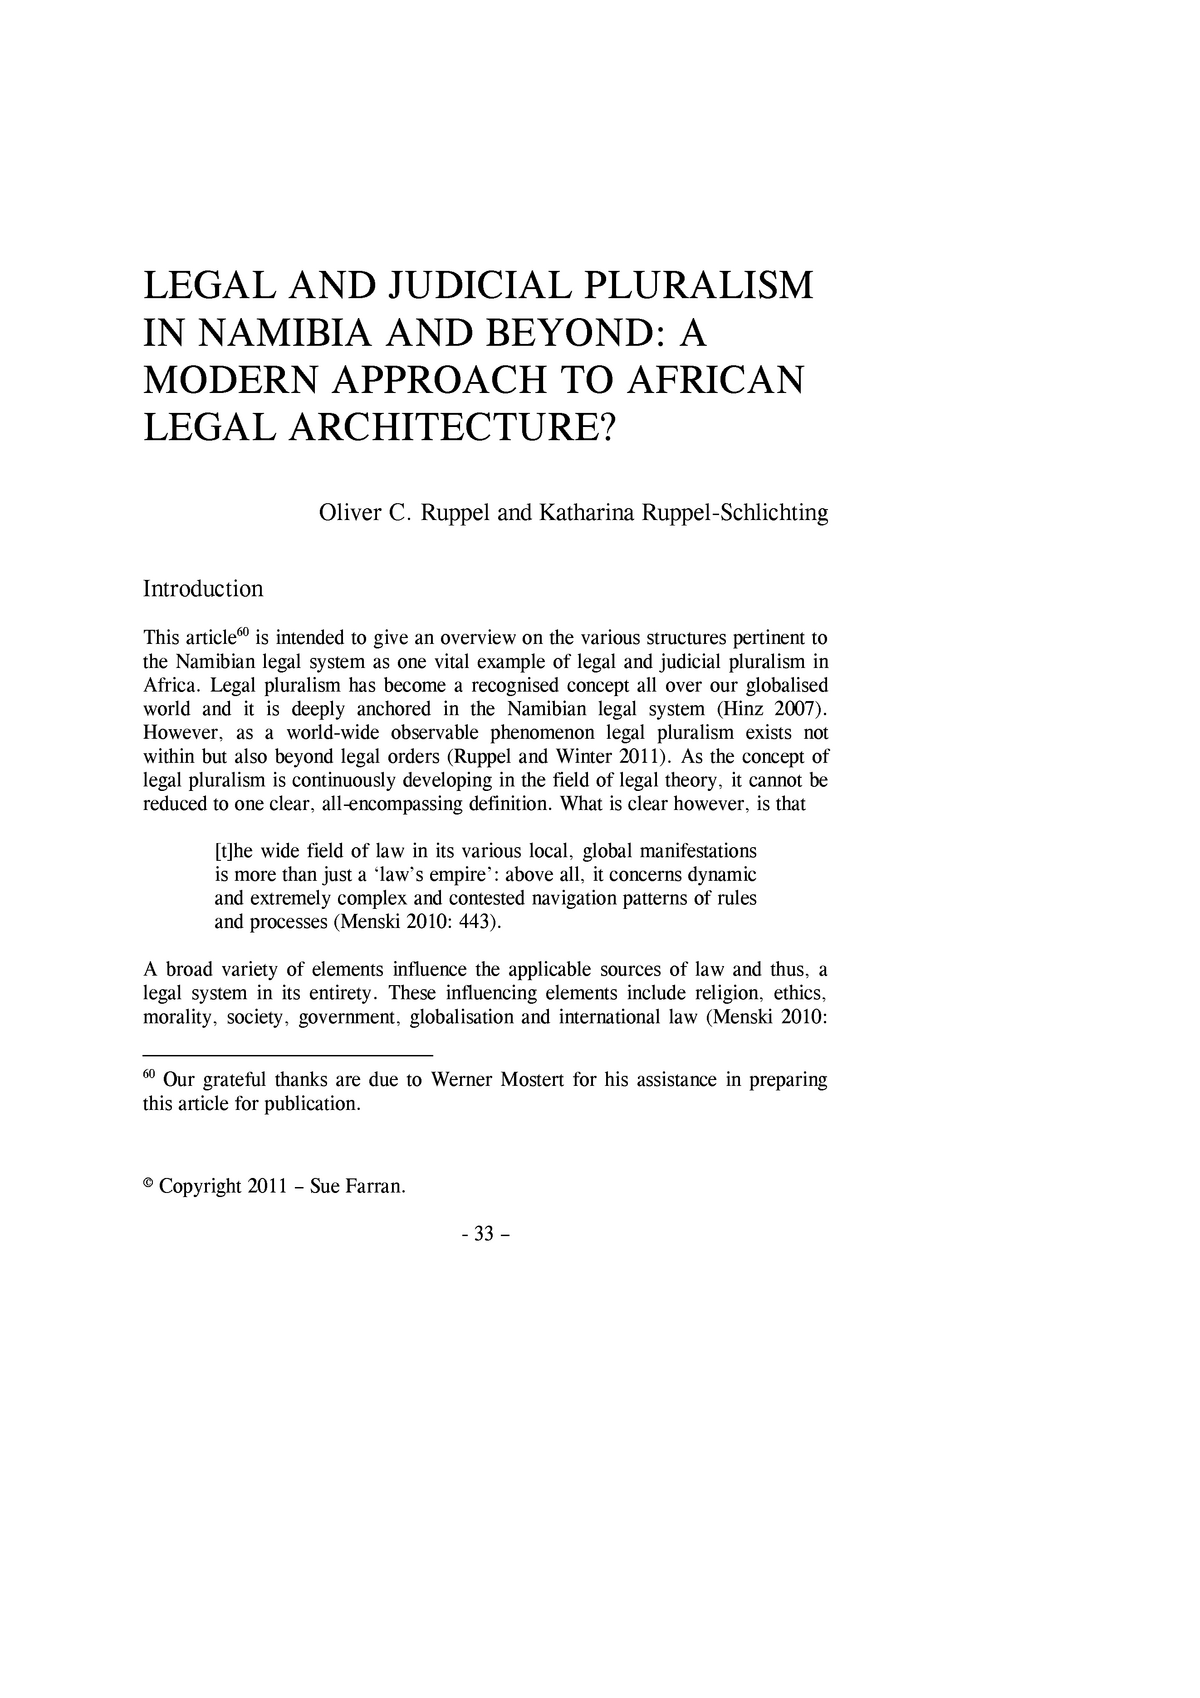 essays on legal pluralism